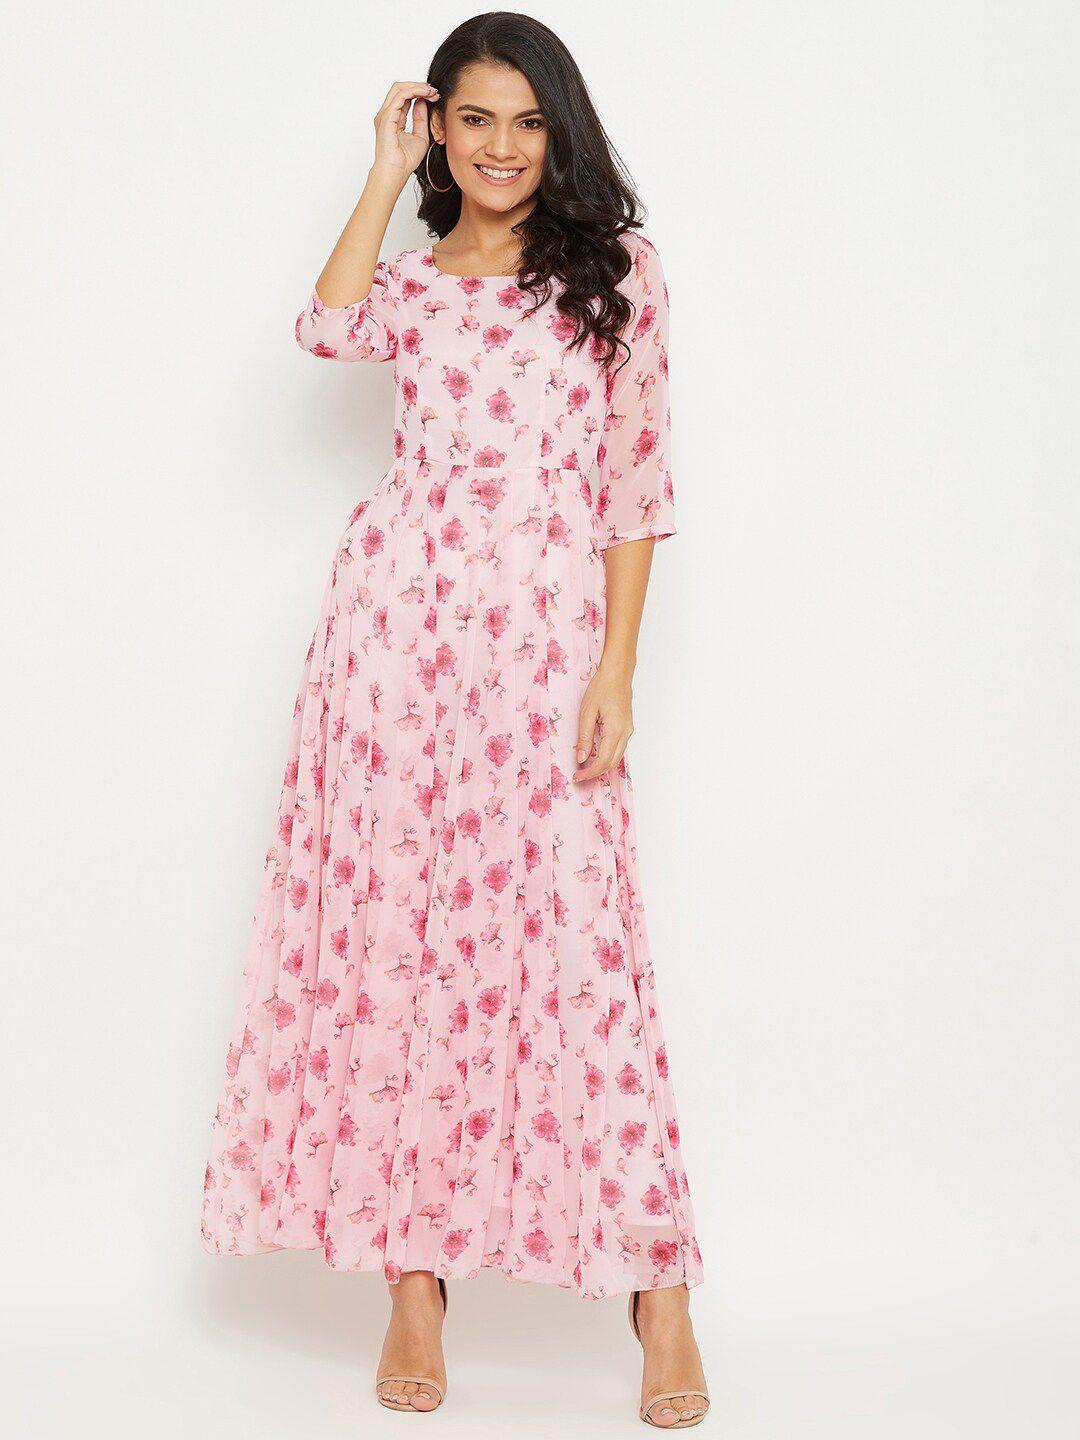 panit women pink floral georgette maxi dress